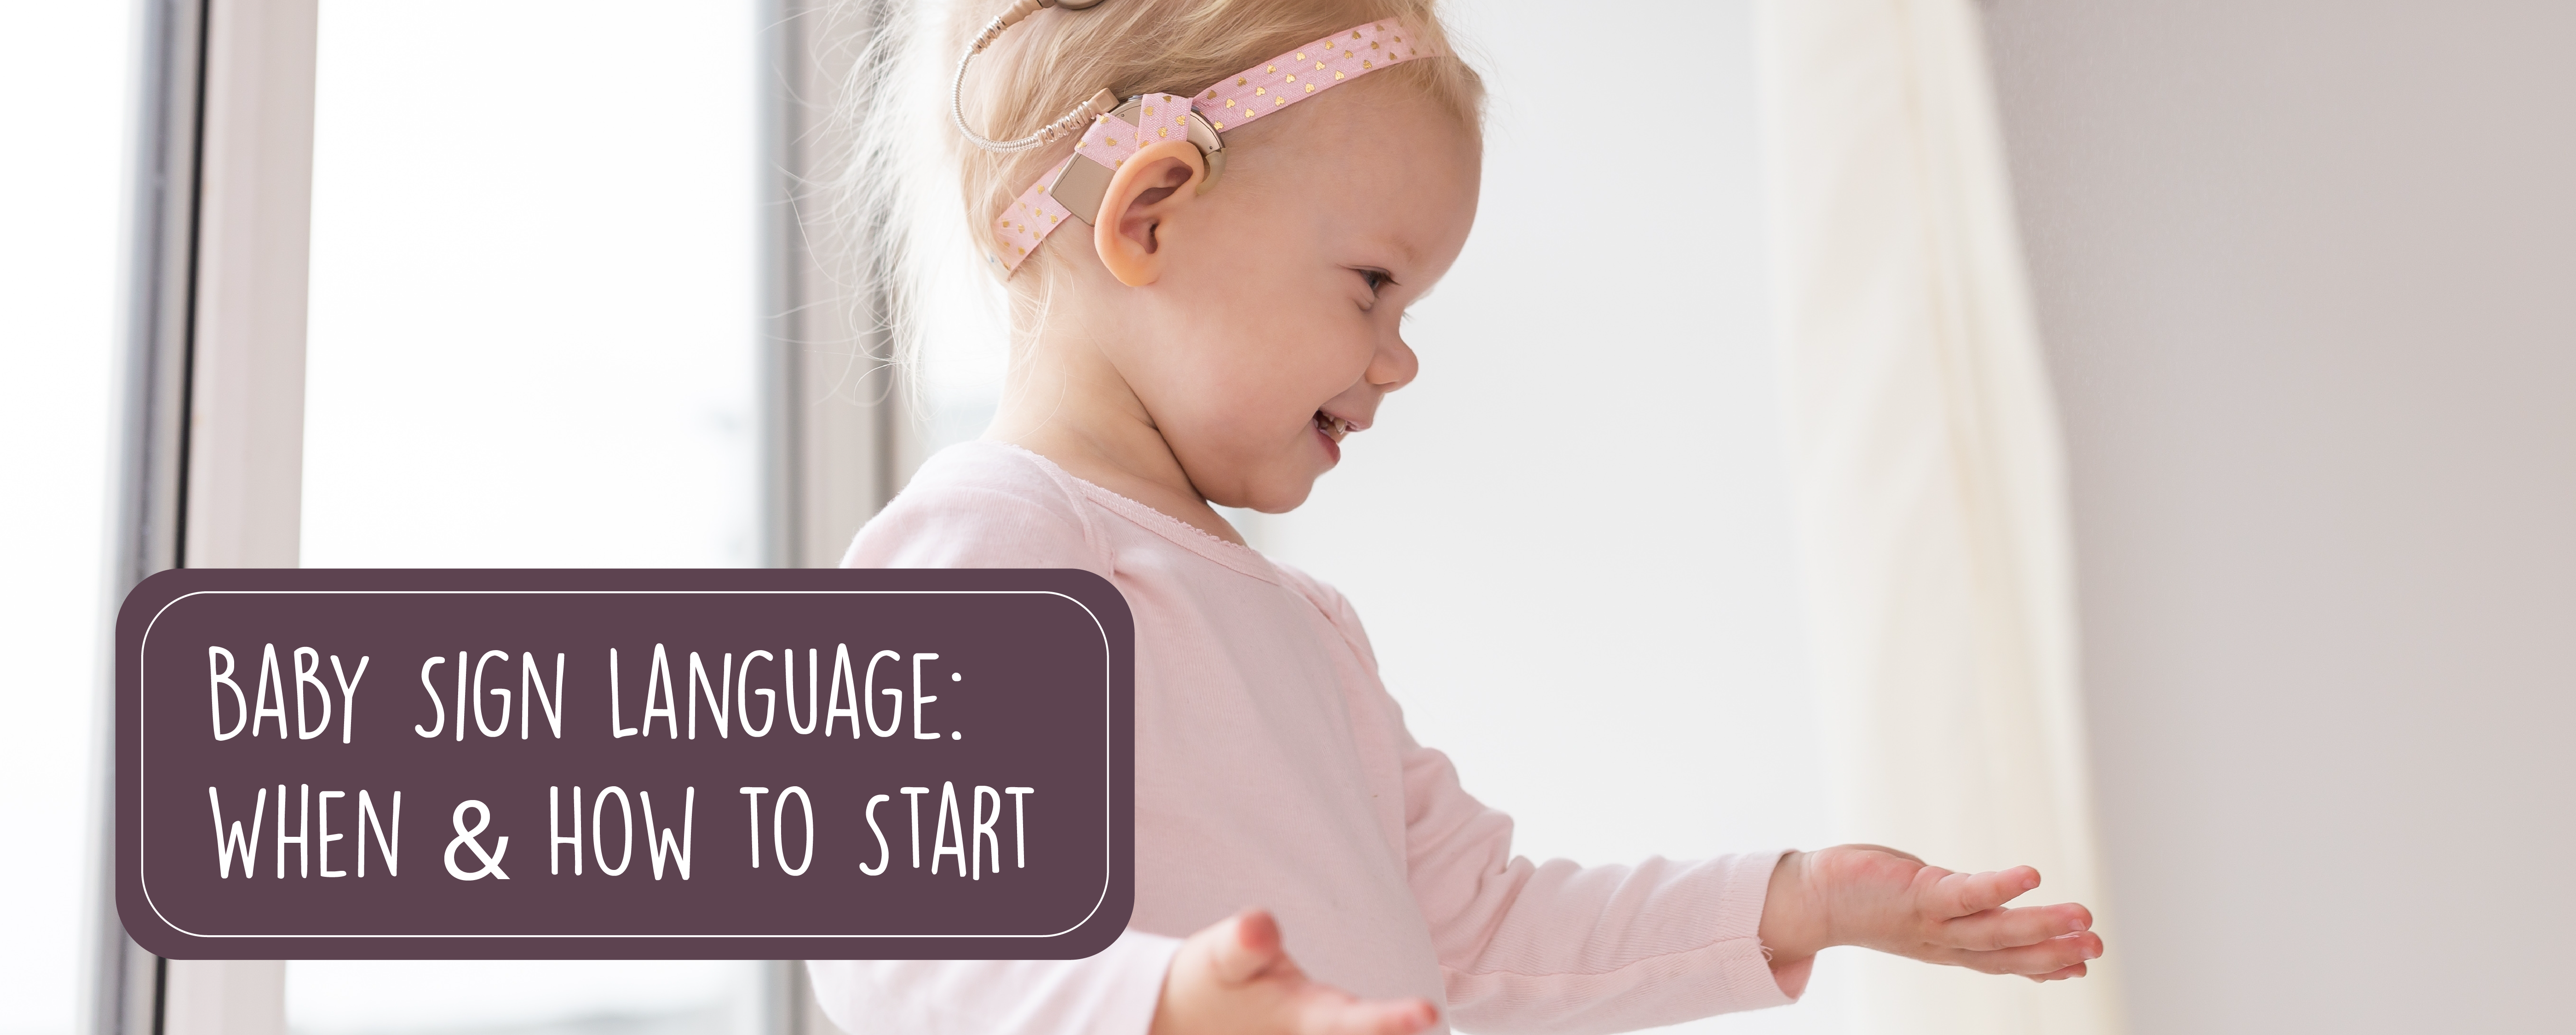 Baby Sign Language: When & How to Start Header